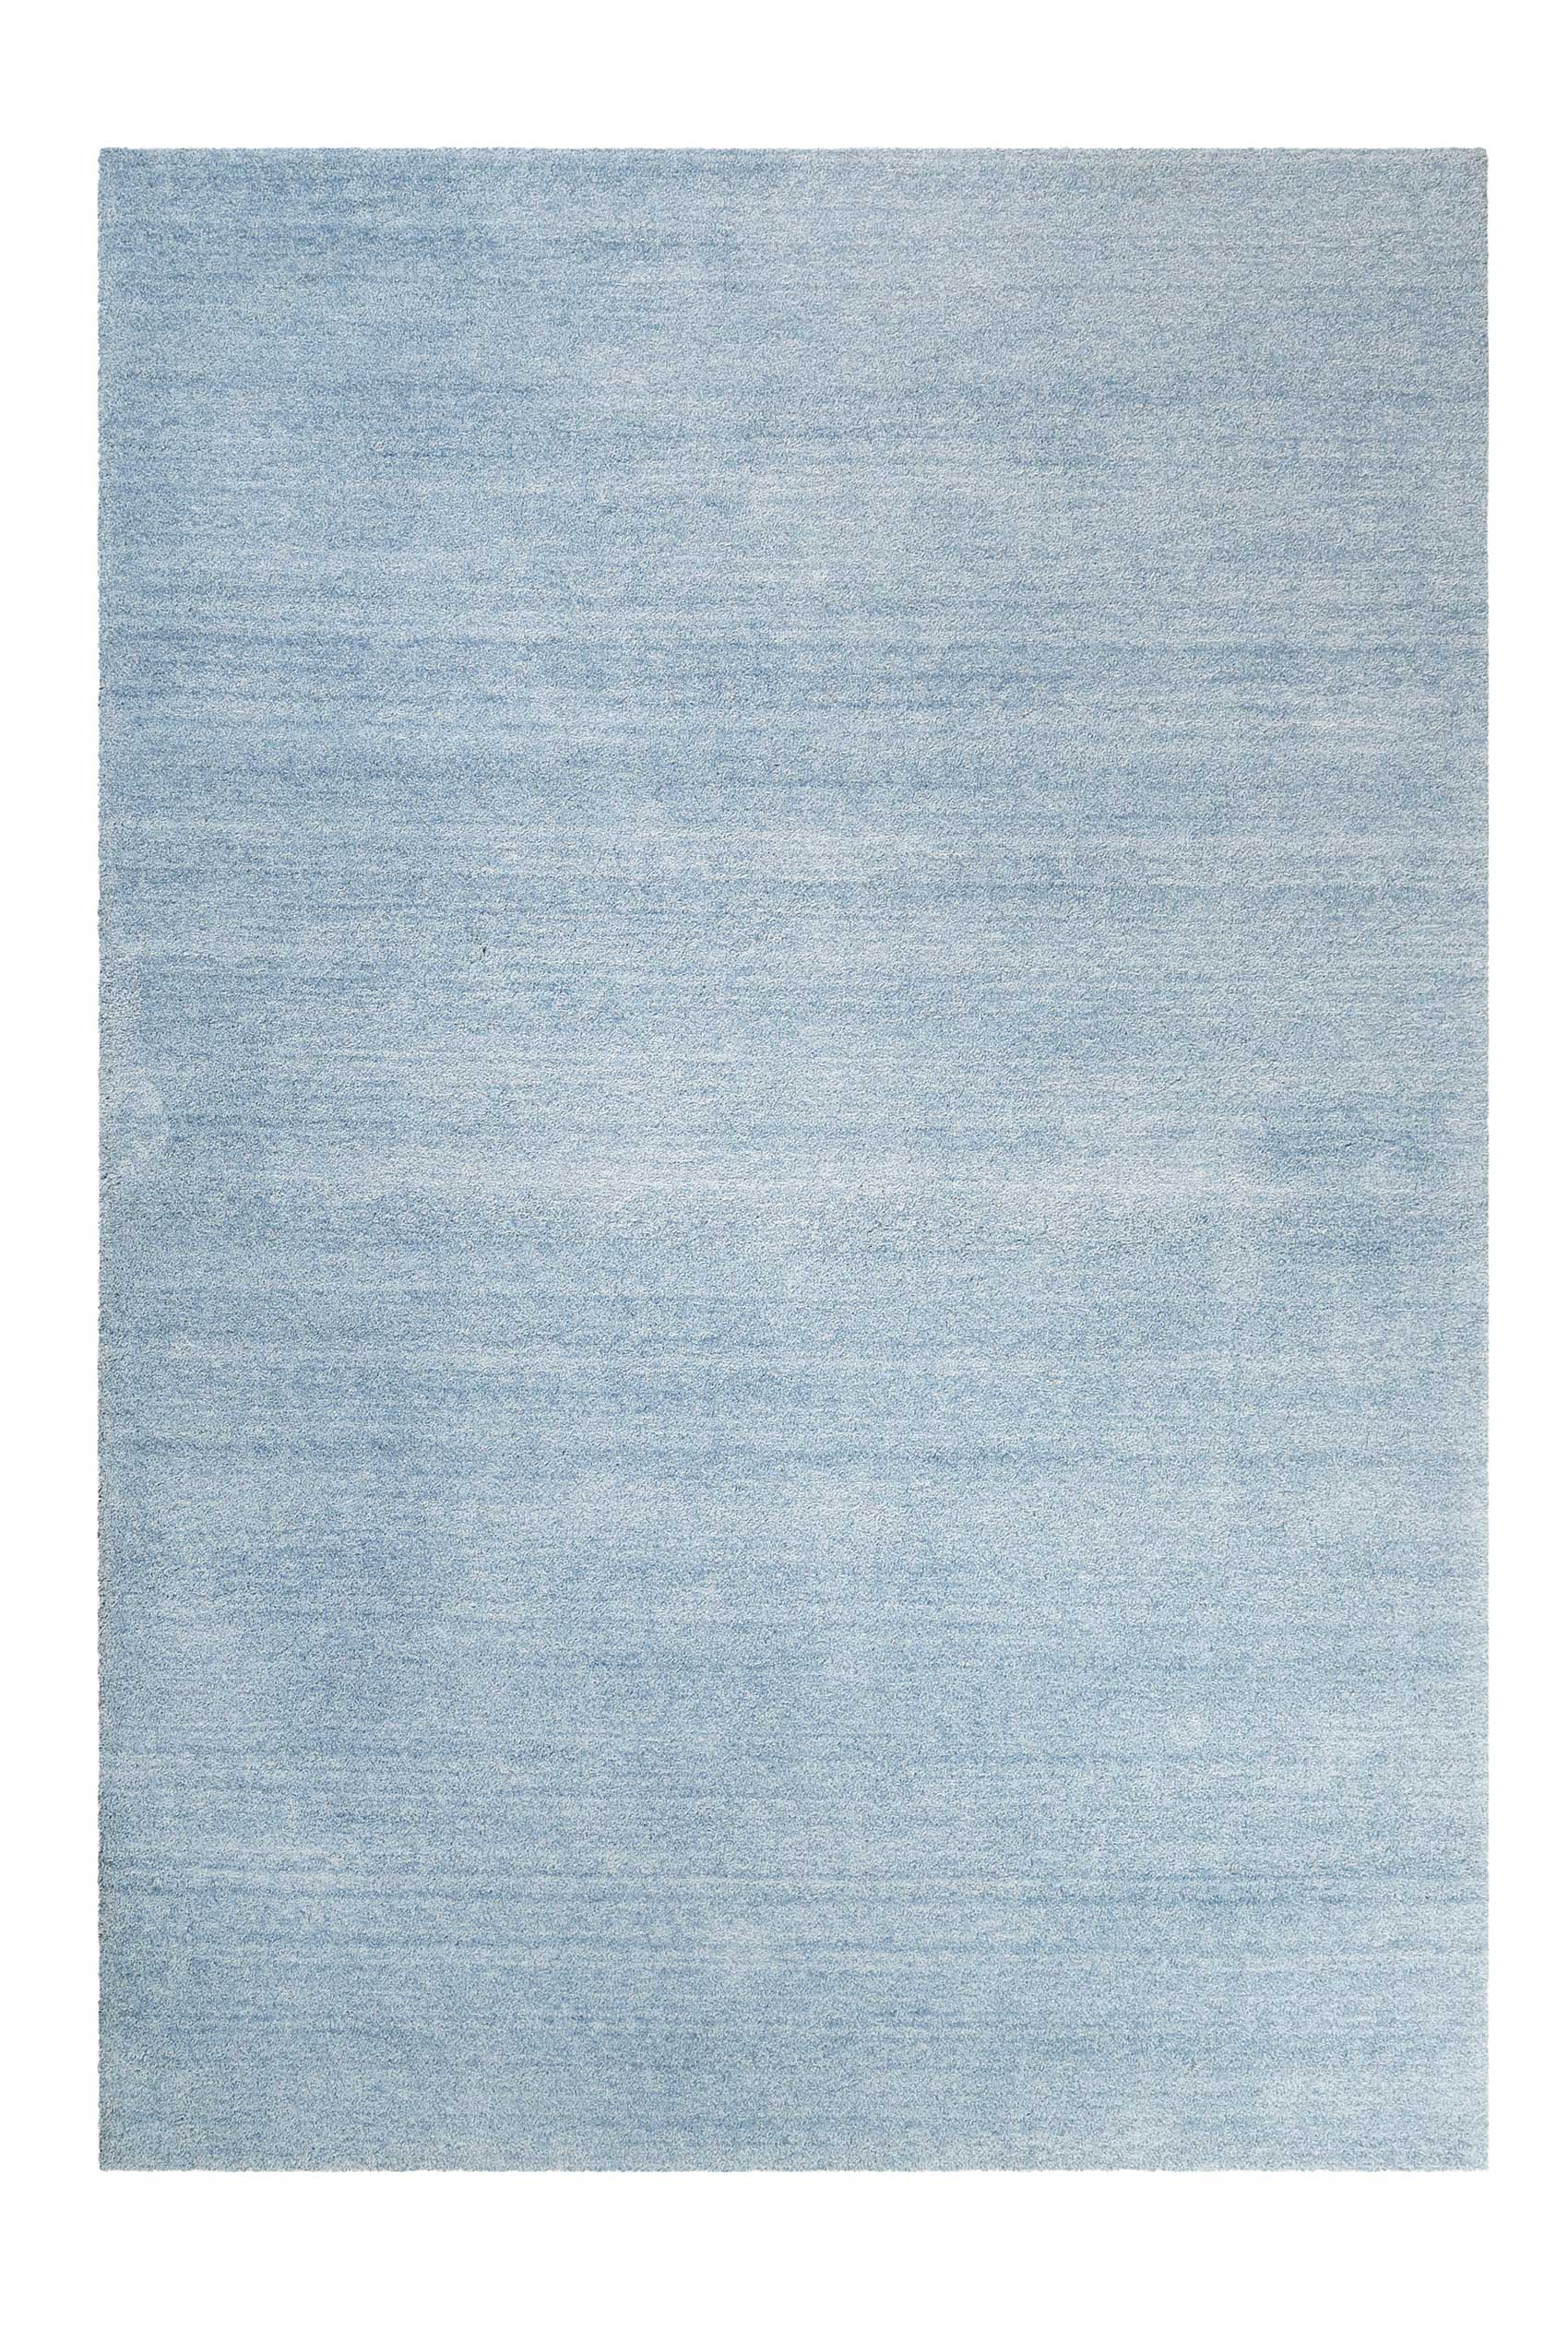 – Esprit Hochflor » Teppich meliert Outlet-Teppiche Hellblau Loft «